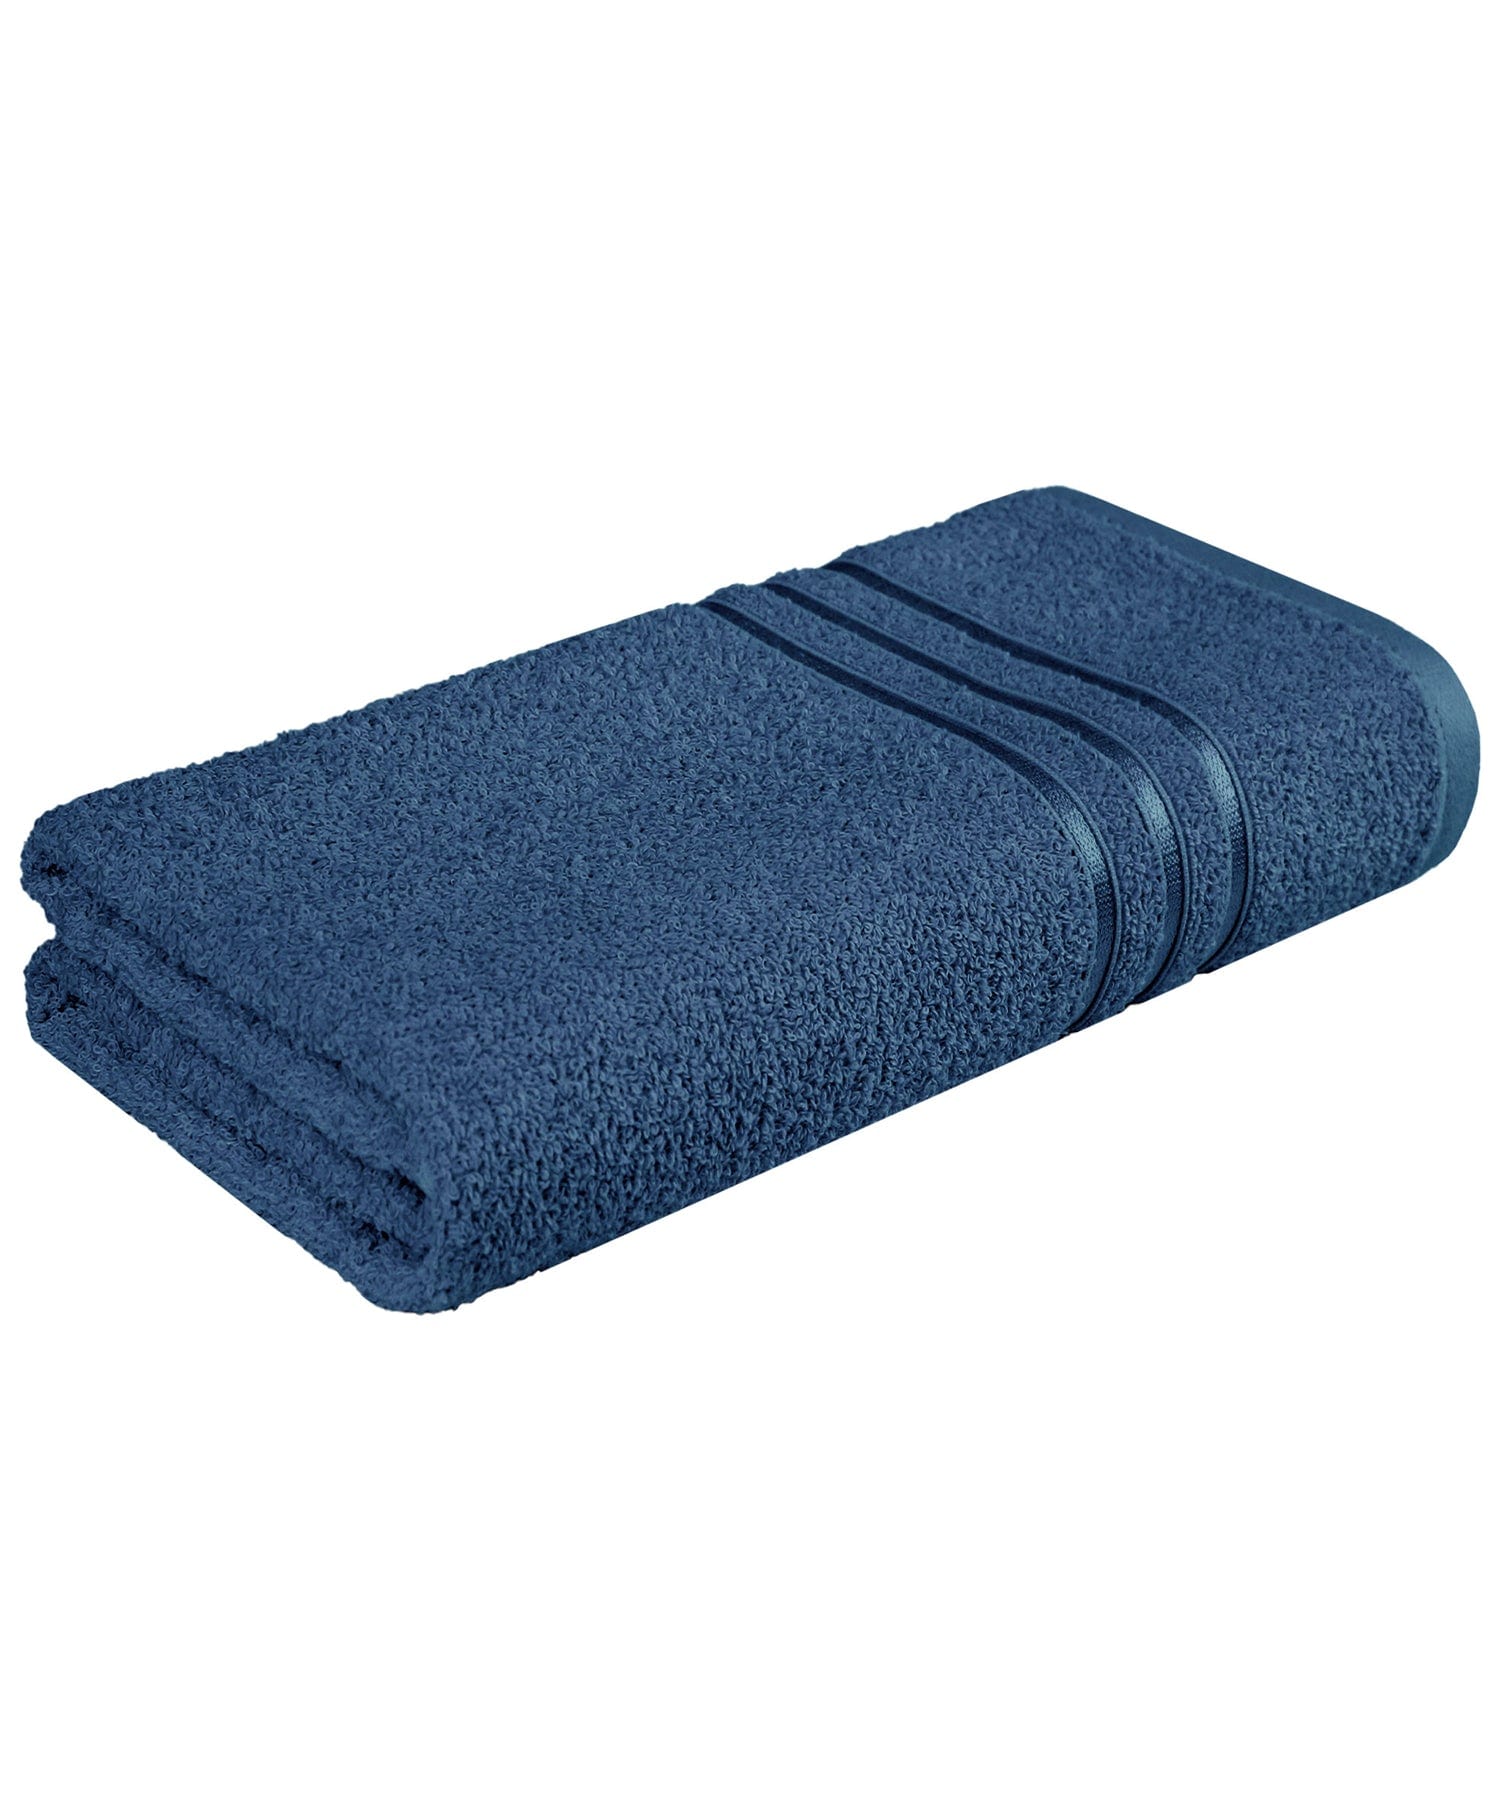 1Pc Bath Towel ₹359/-